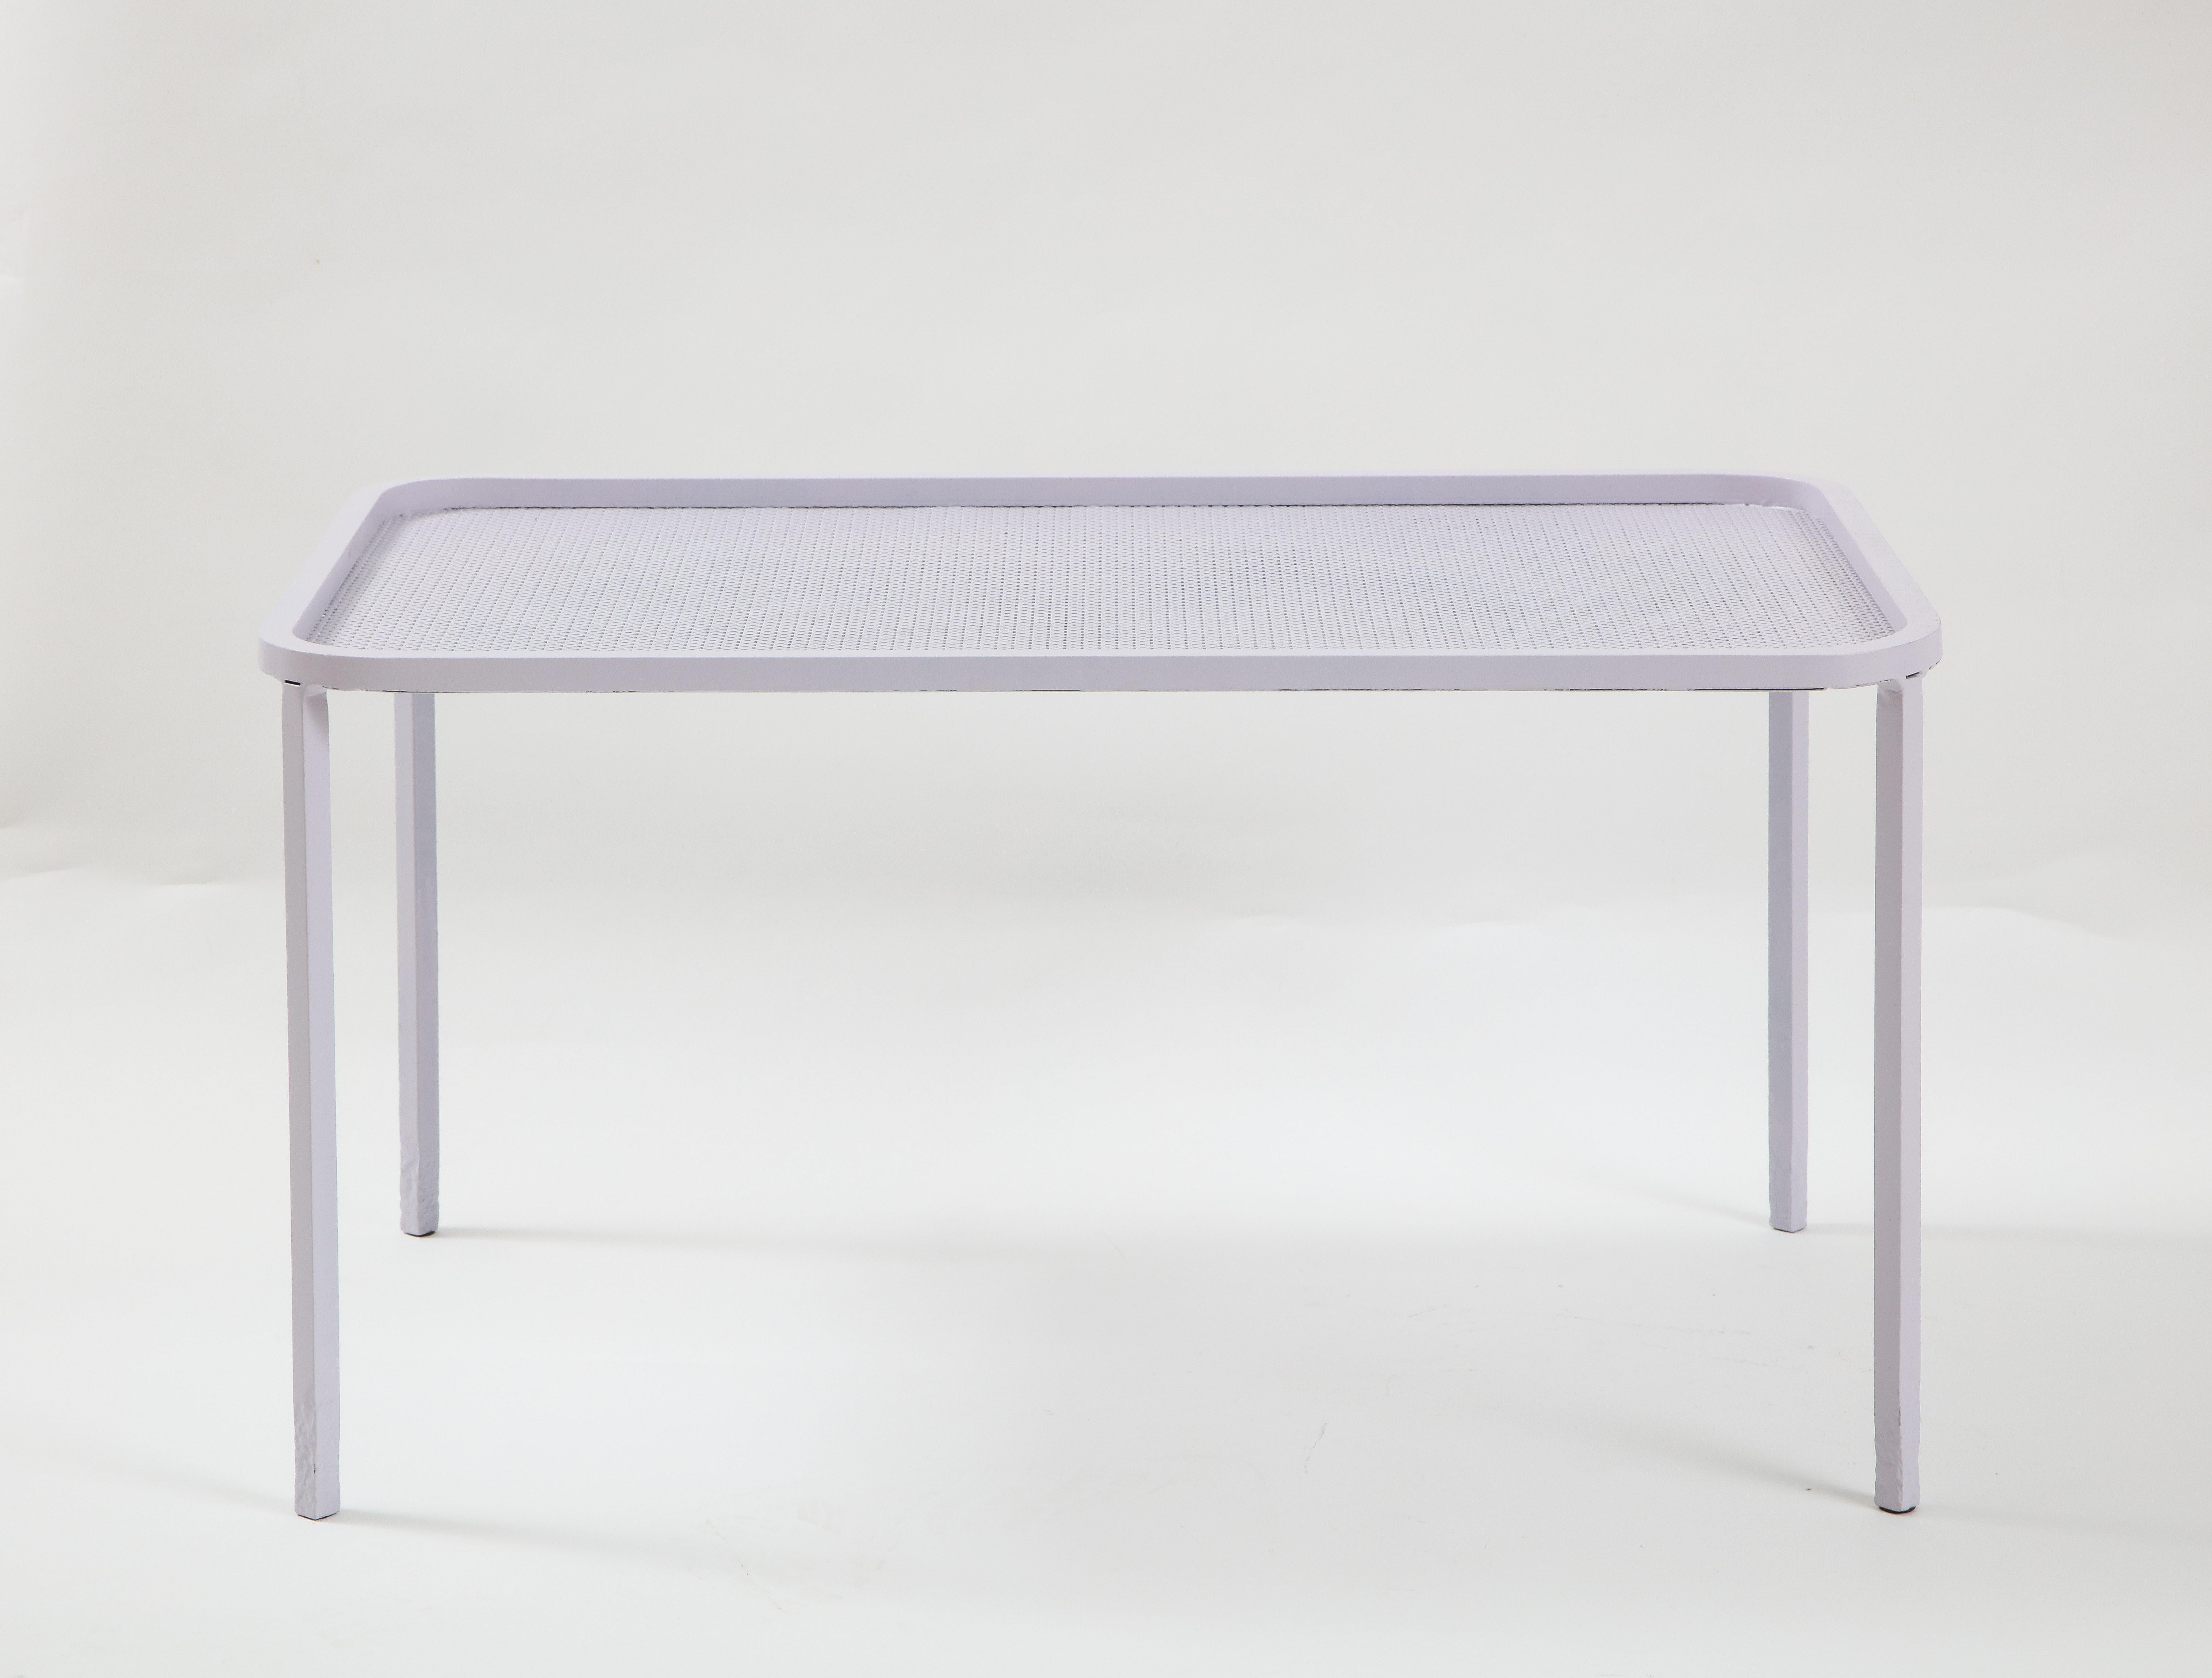 Mid-Century Modern Mathieu Matégot White Rectangular Perforated Metal Coffee Table For Sale